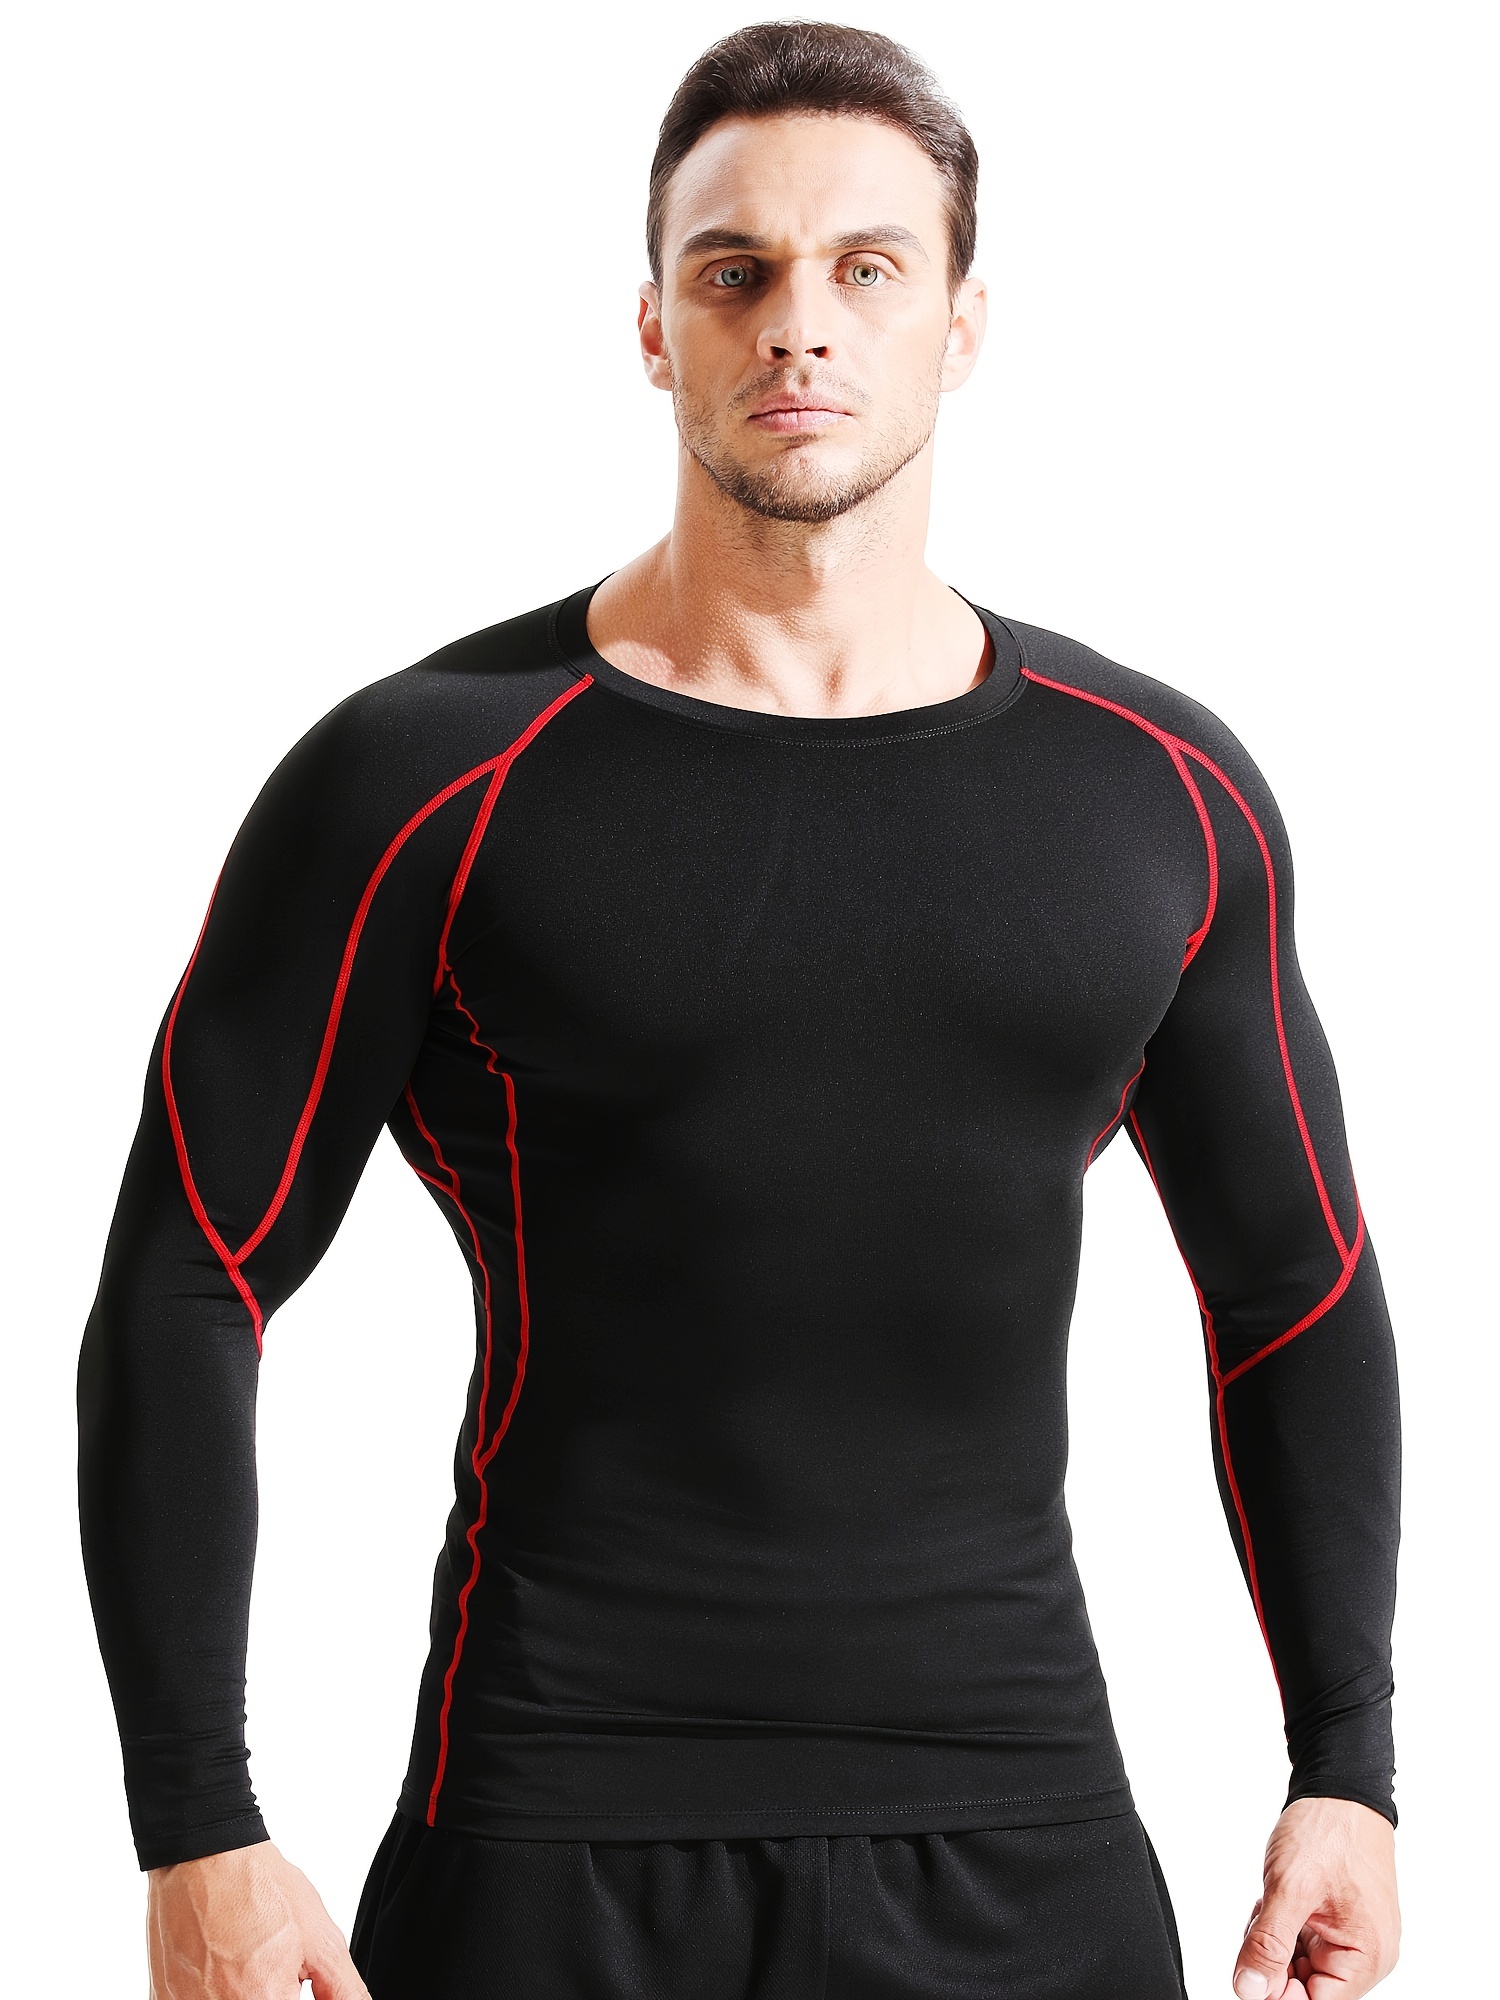 Autumn Long Sleeve Compression Shirt Men Fitness T-shirt Sports